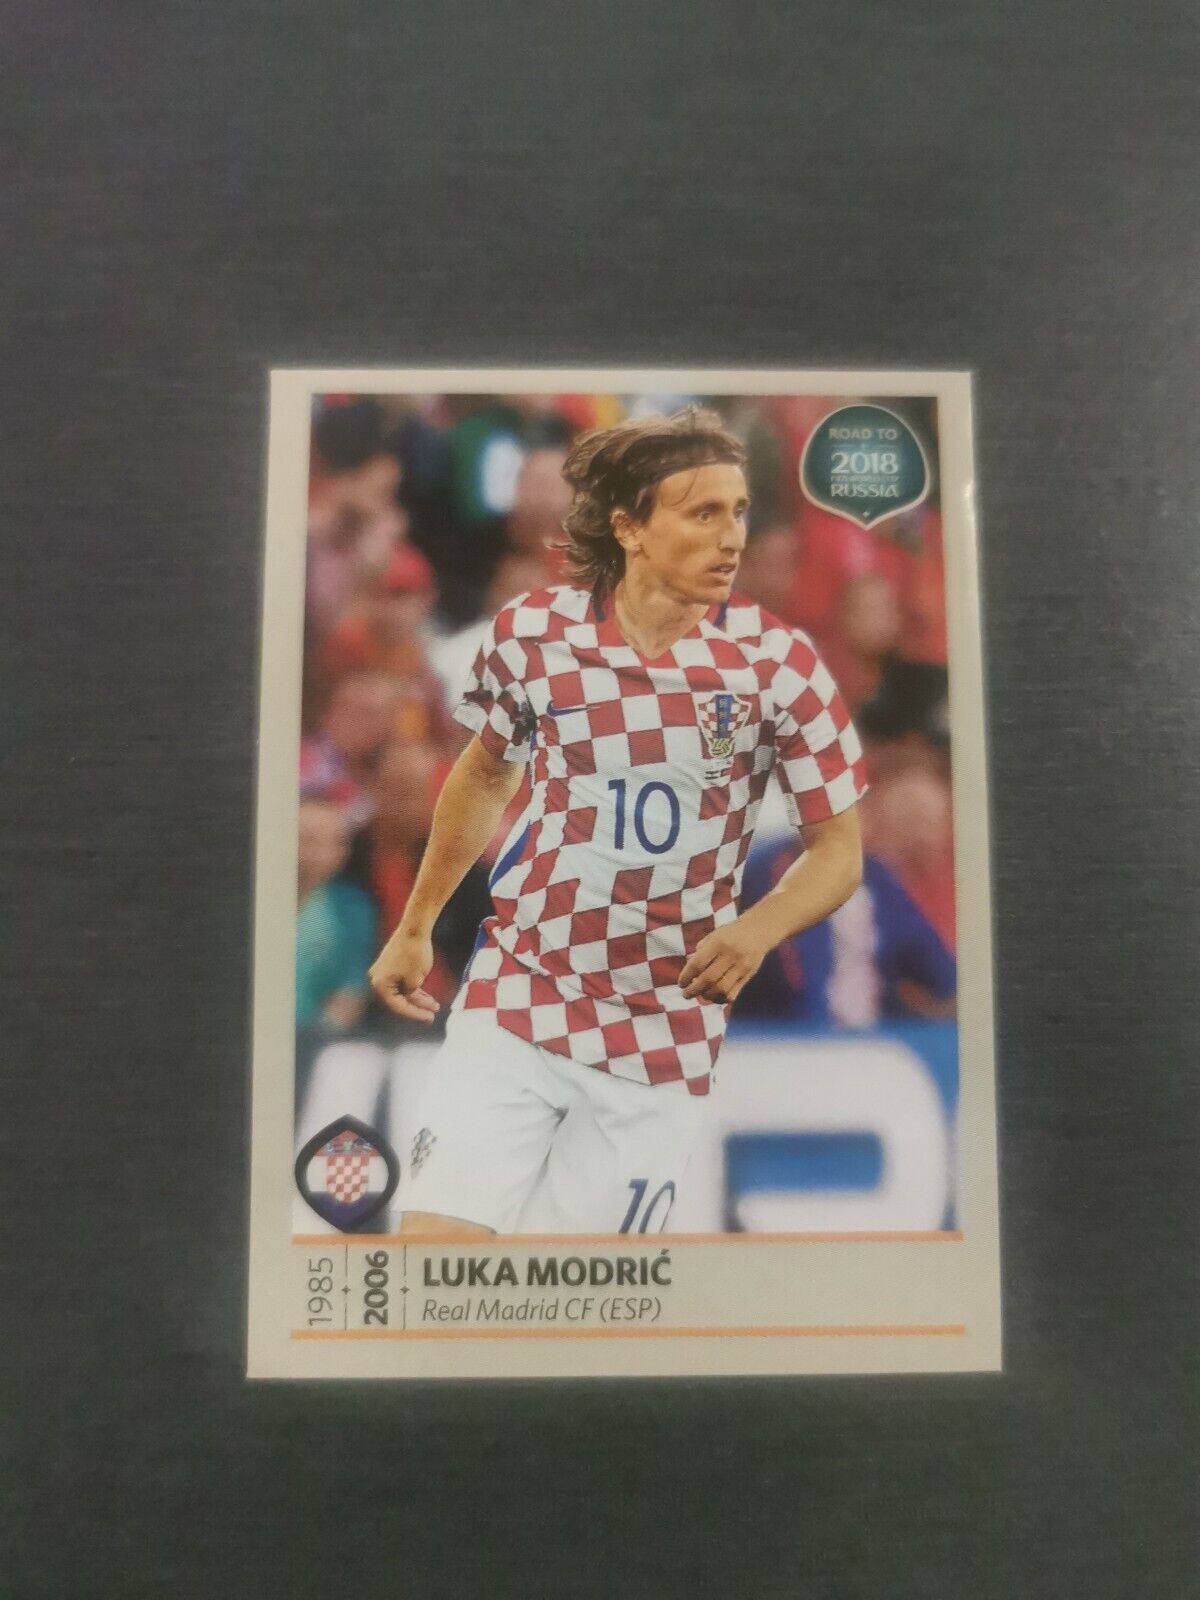 2018 Luka Modric Croatia 26 Road To Russia Panini Picture MINT 